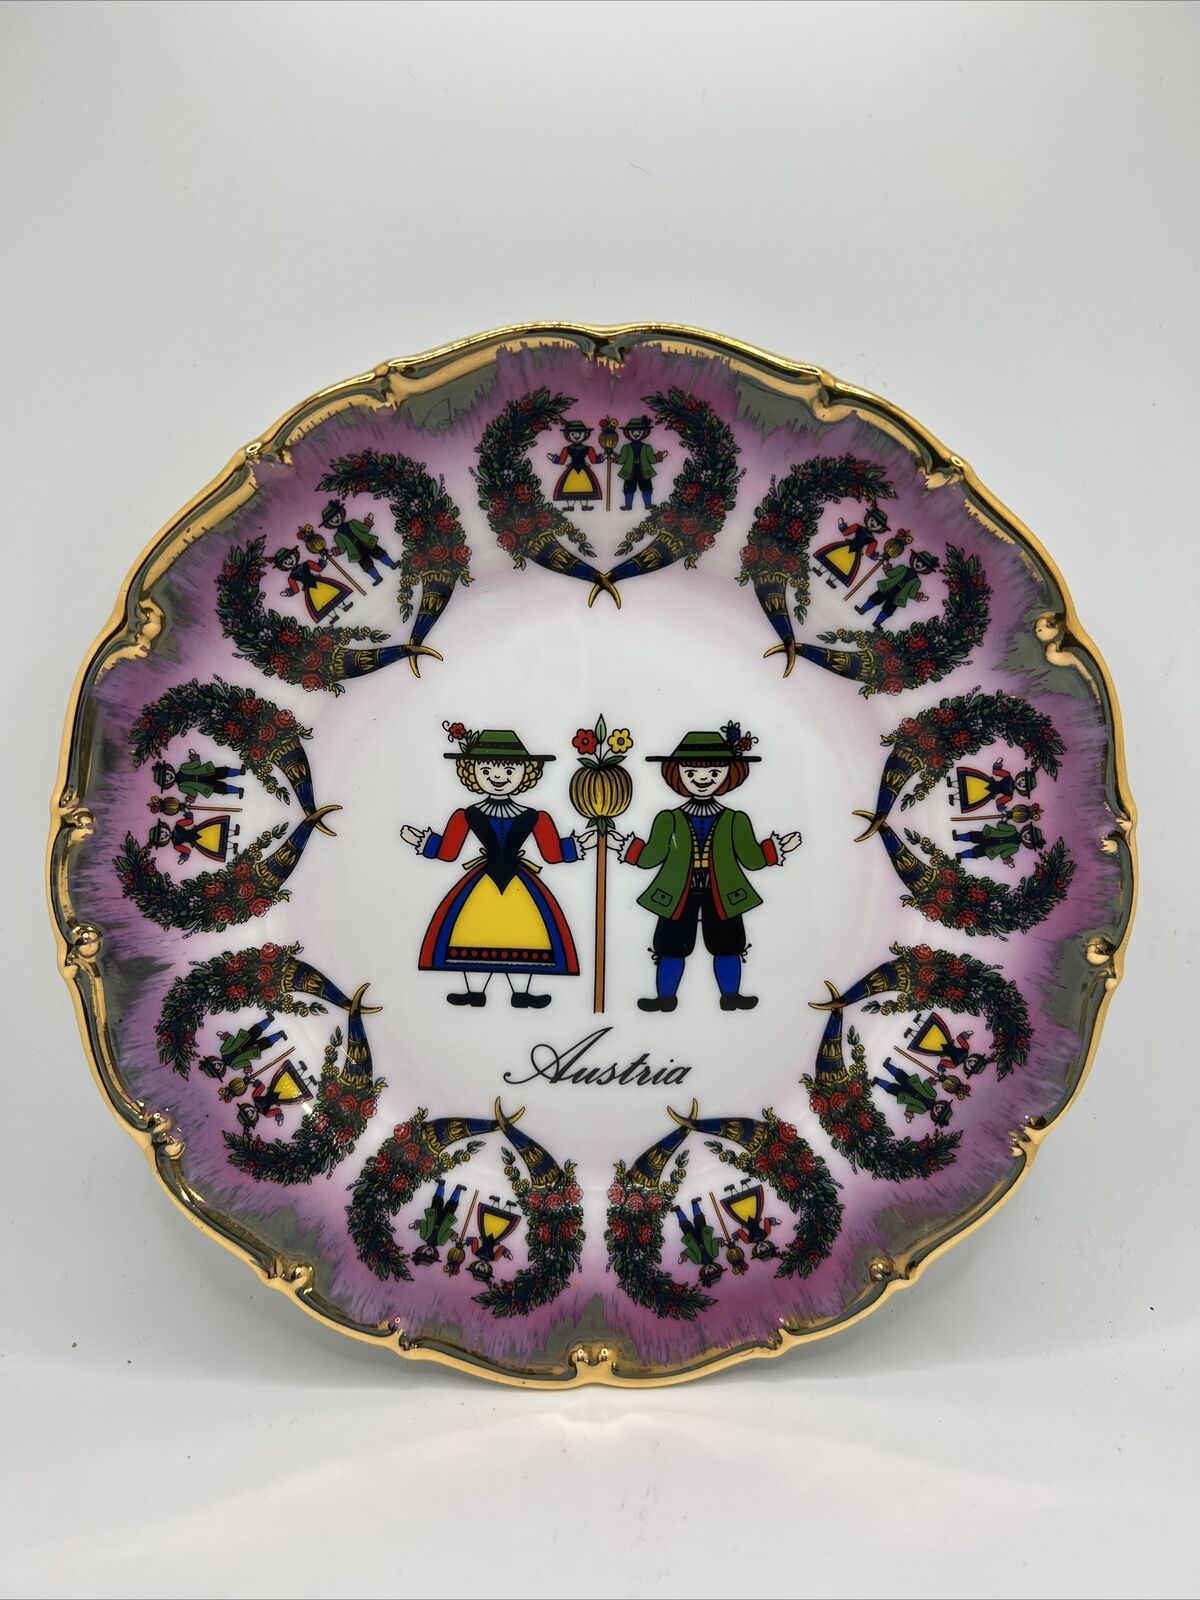 Austria Decorate Plate boy girl national costume gold rim 7 1/2 inches